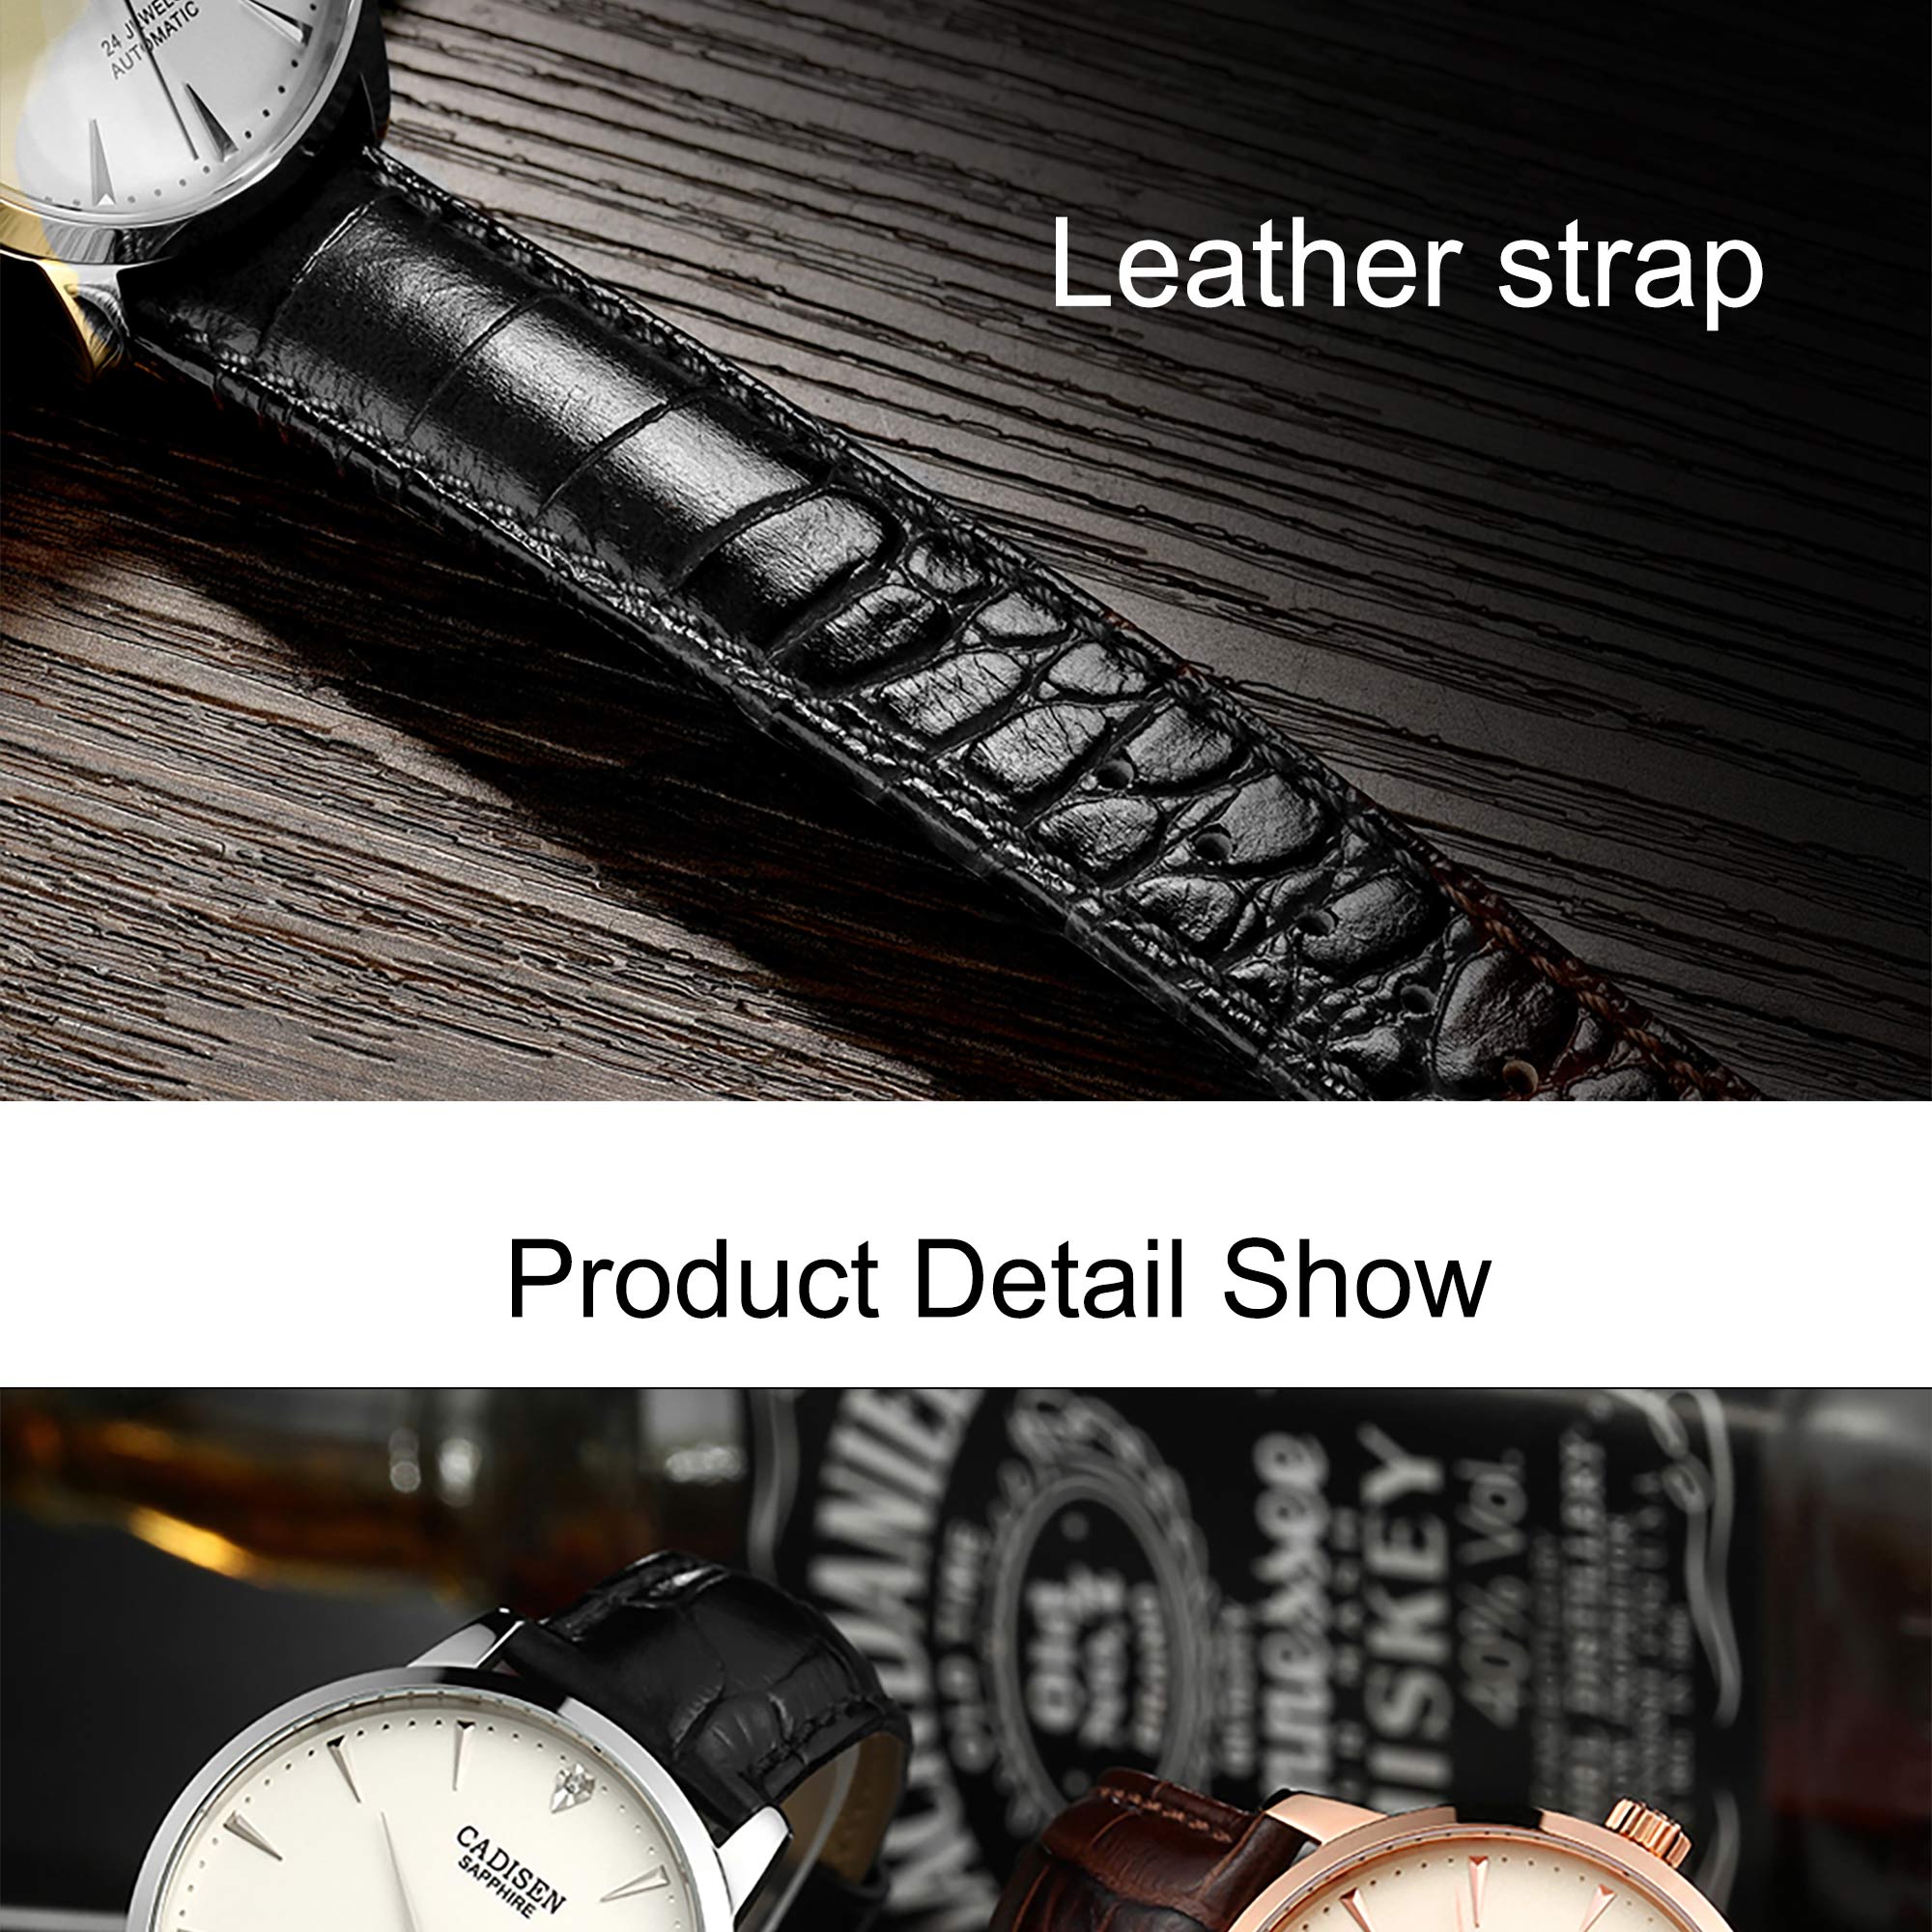 CADISEN Men Watches Automatic Mechanical Wrist Watch MIYOTA 9015 Top Brand Luxury Real Diamond Watch Curved Sapphire Glass Clock